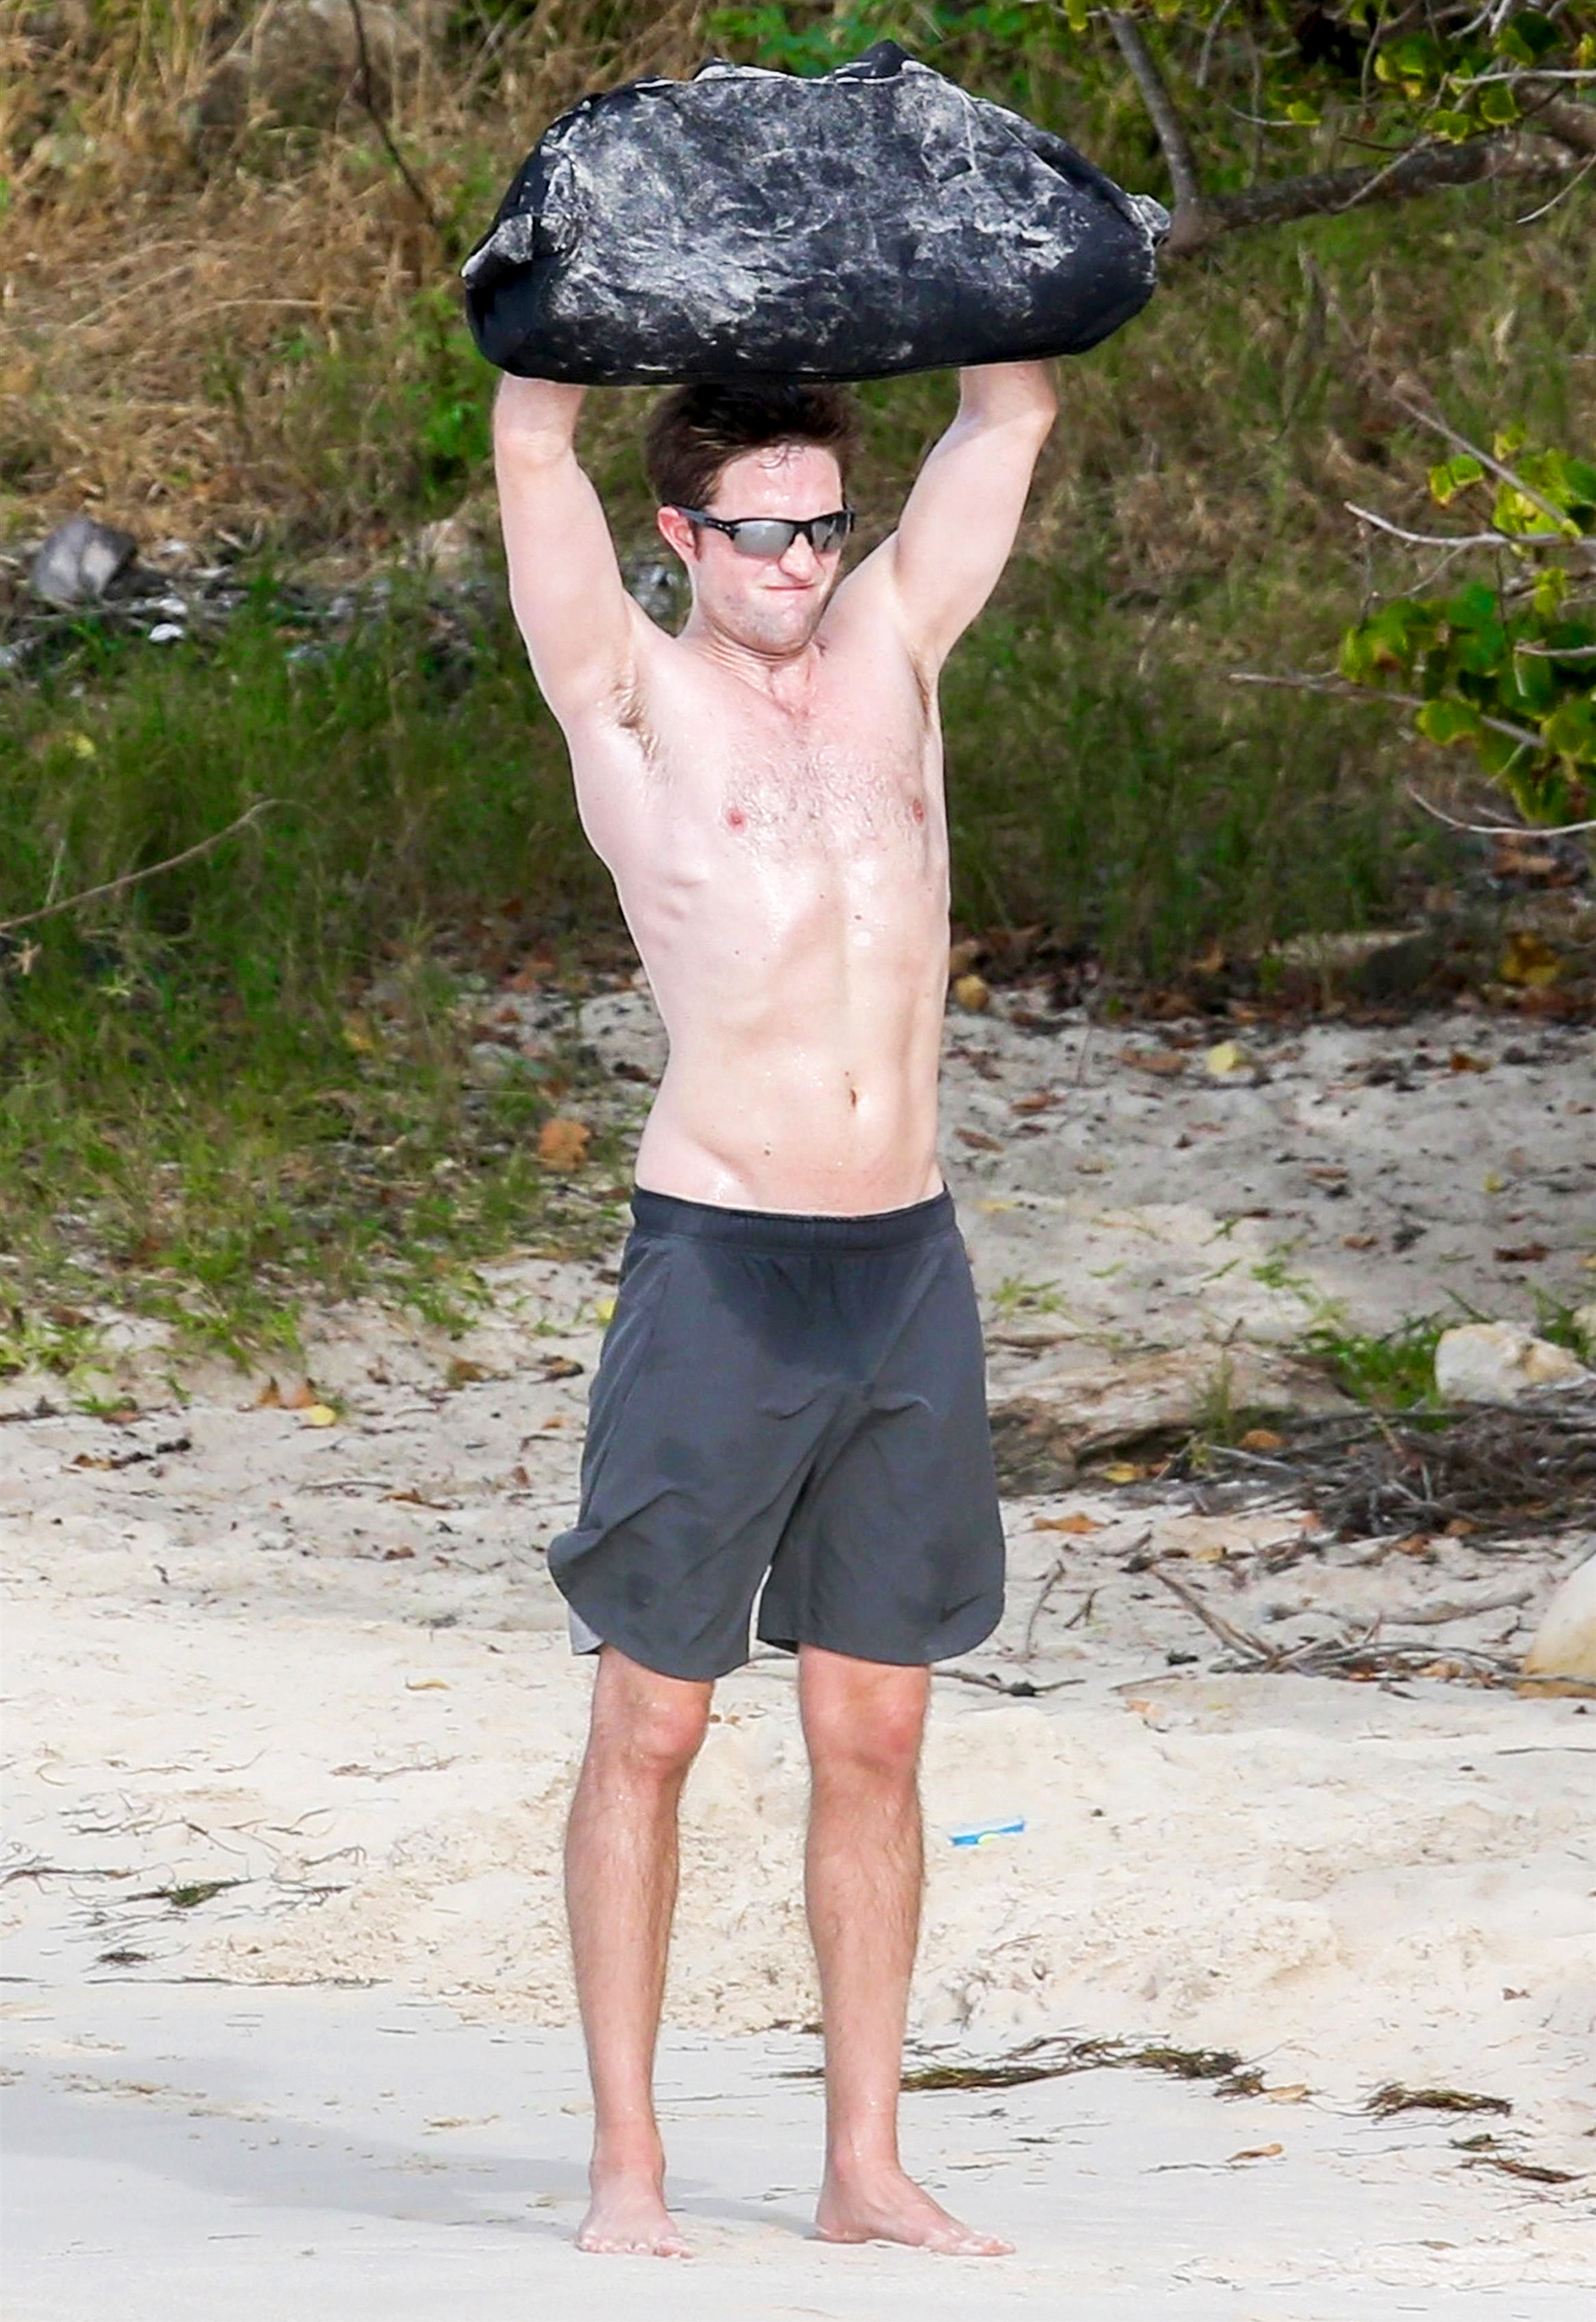 Robert Pattinson Body Type One Celebrity - Figure